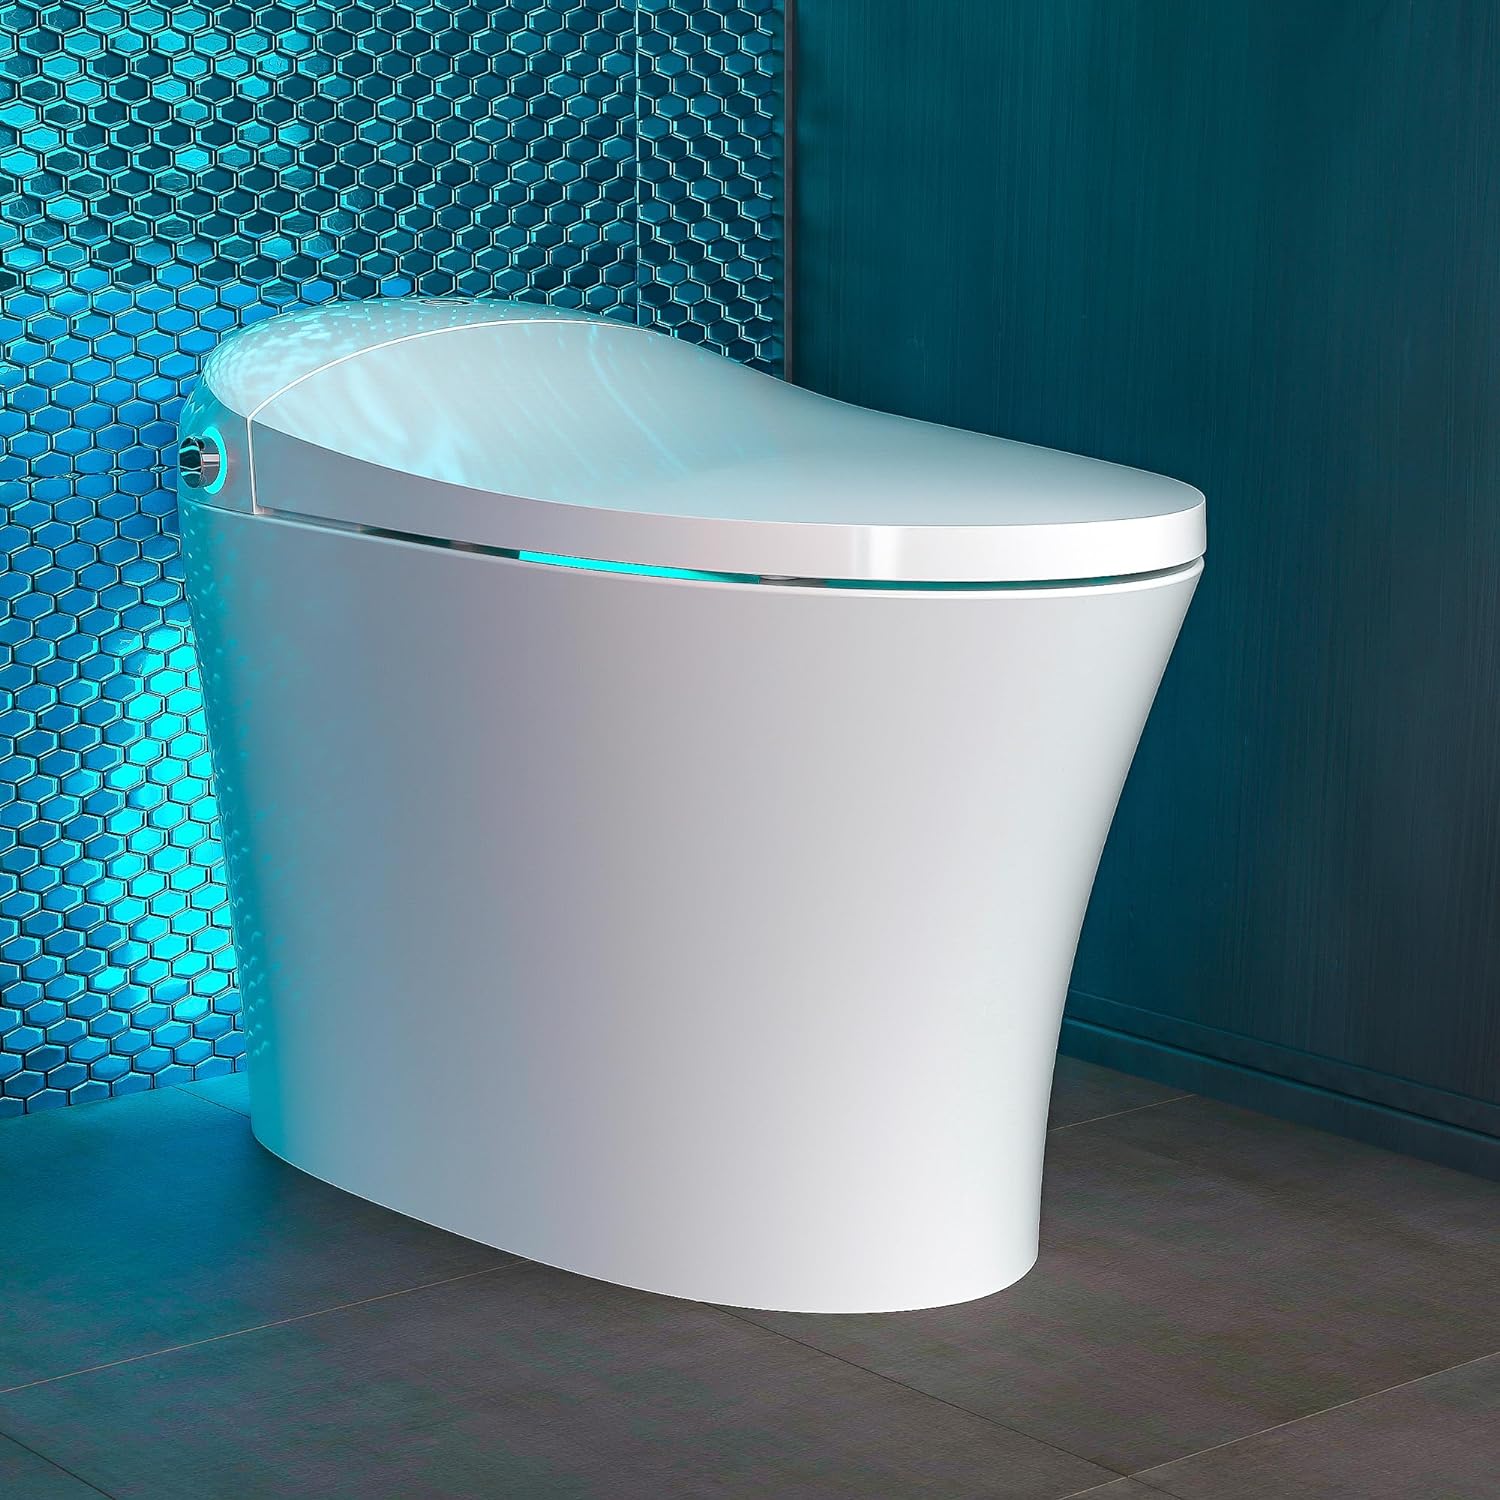 Smart Bidet Toilet System with Heat, Automatic Flushing, LED lights